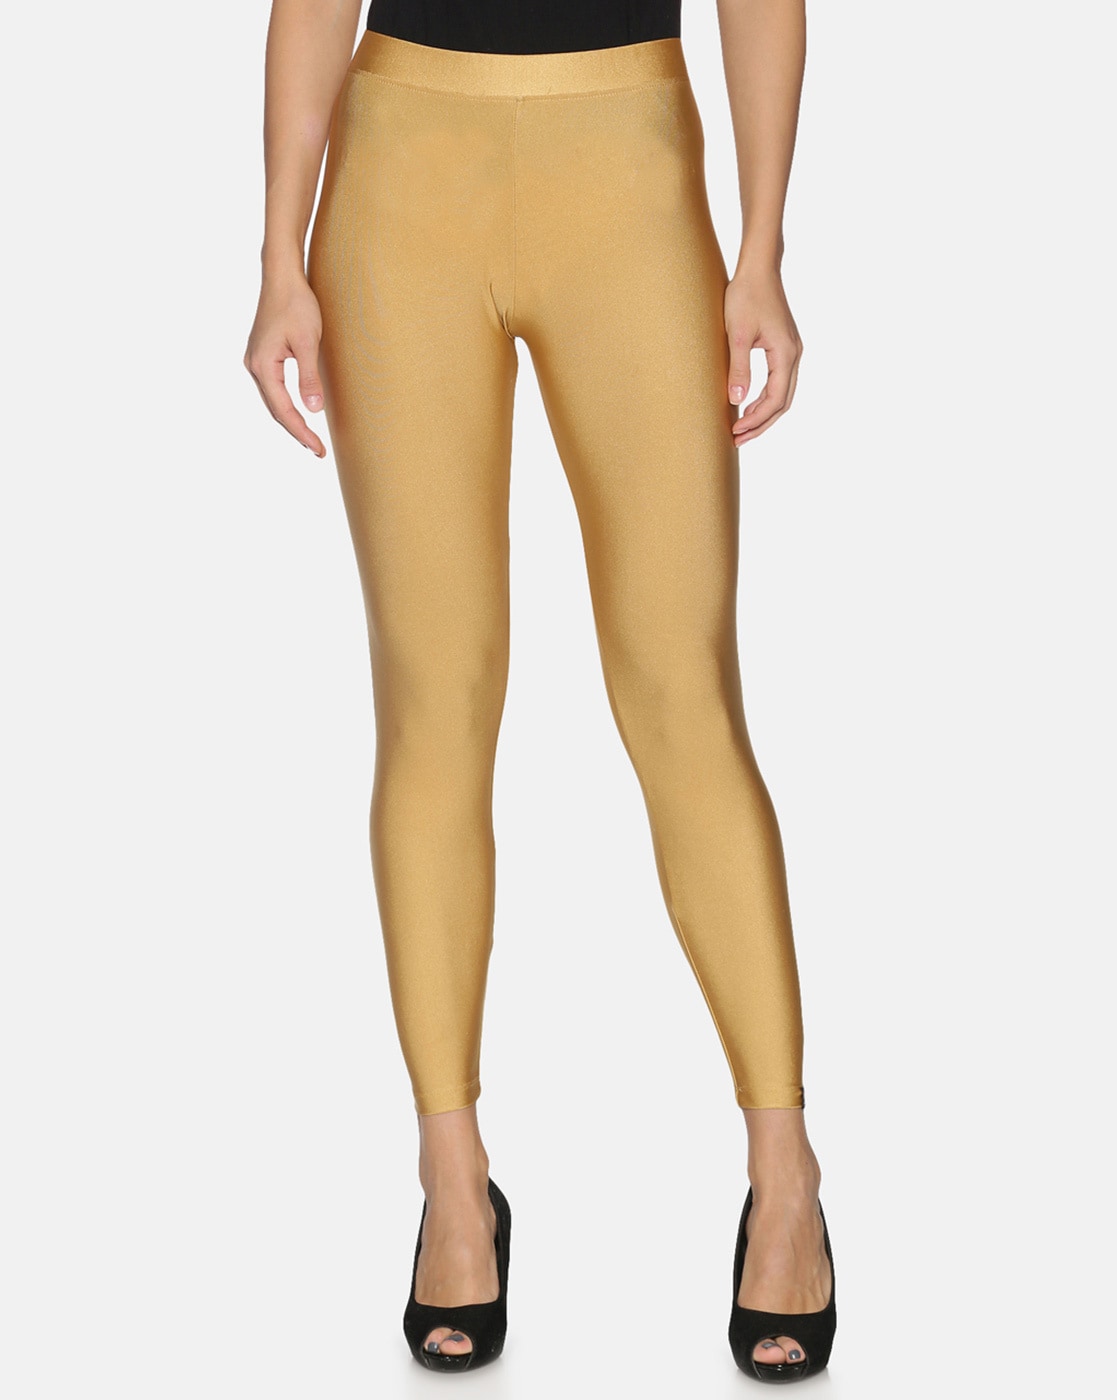 Experience more than 135 golden colour leggings super hot